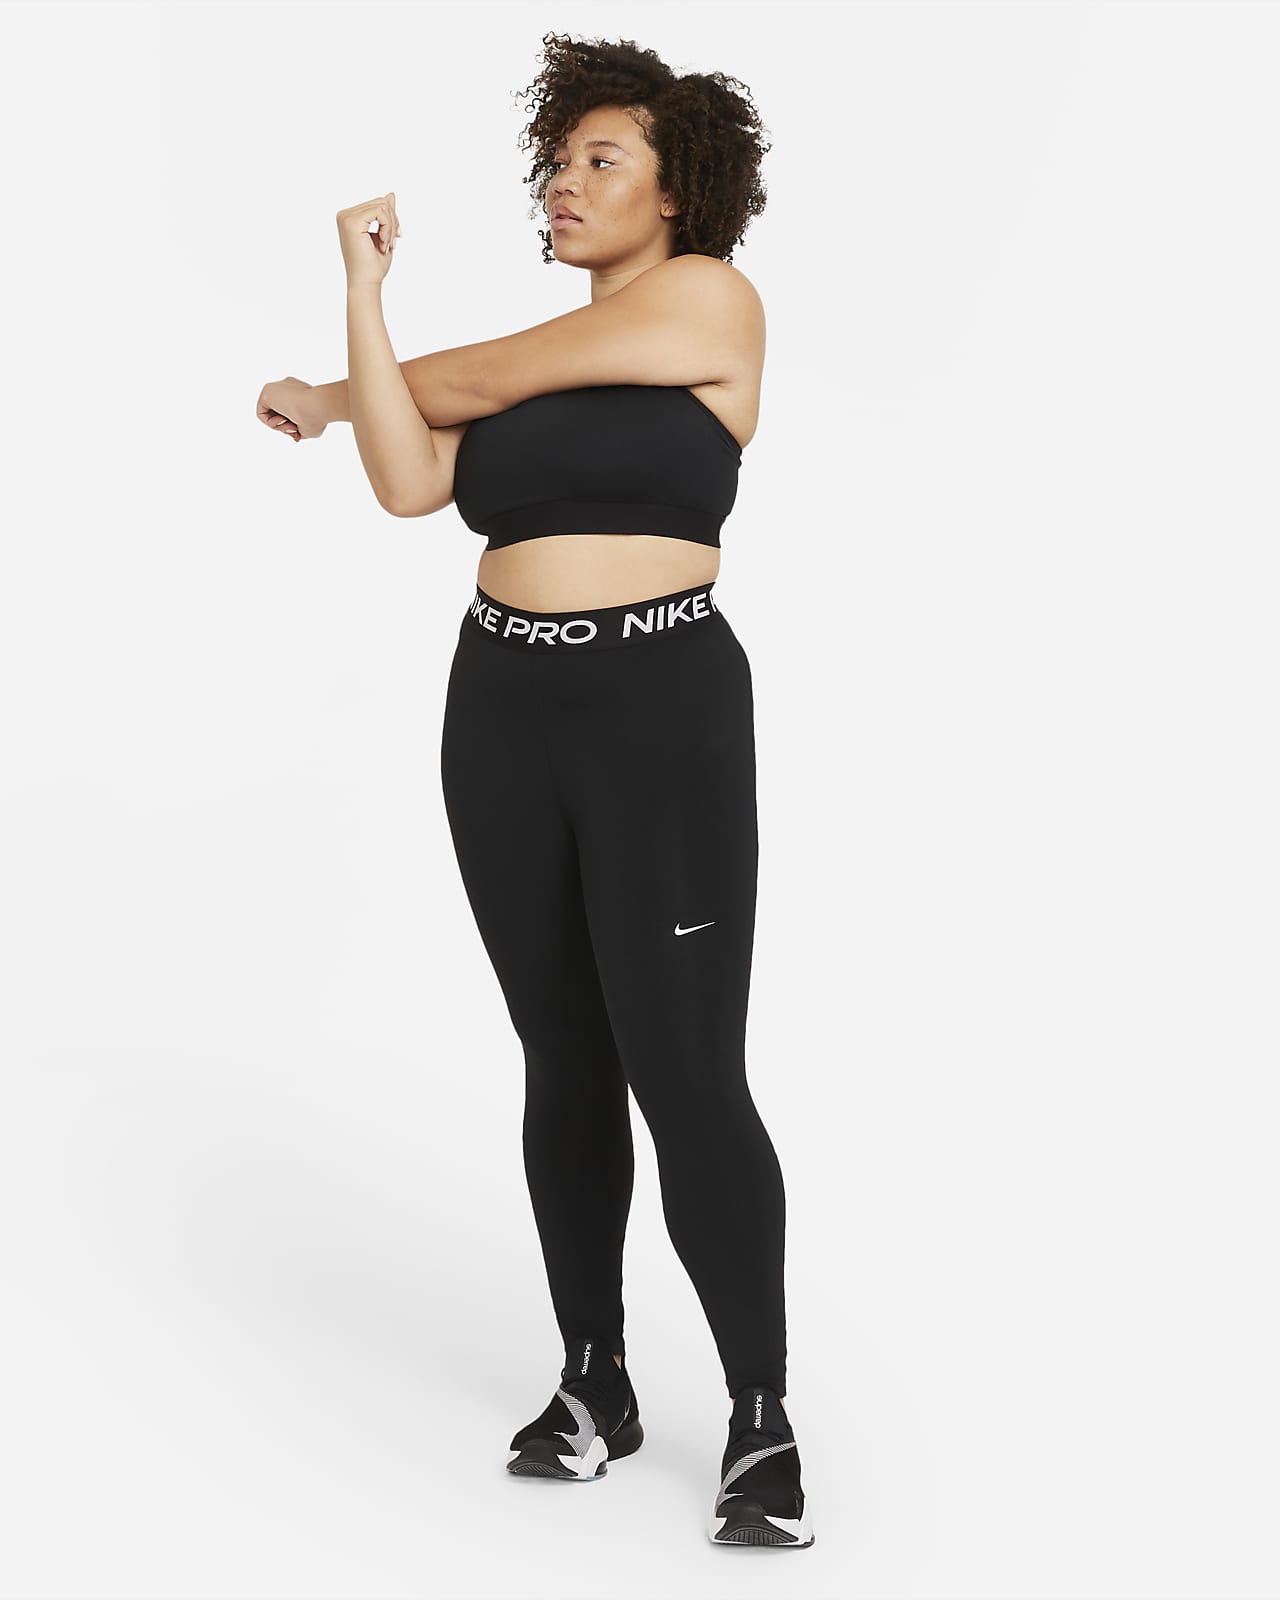 Nike Pro Women's Tights. Nike NL